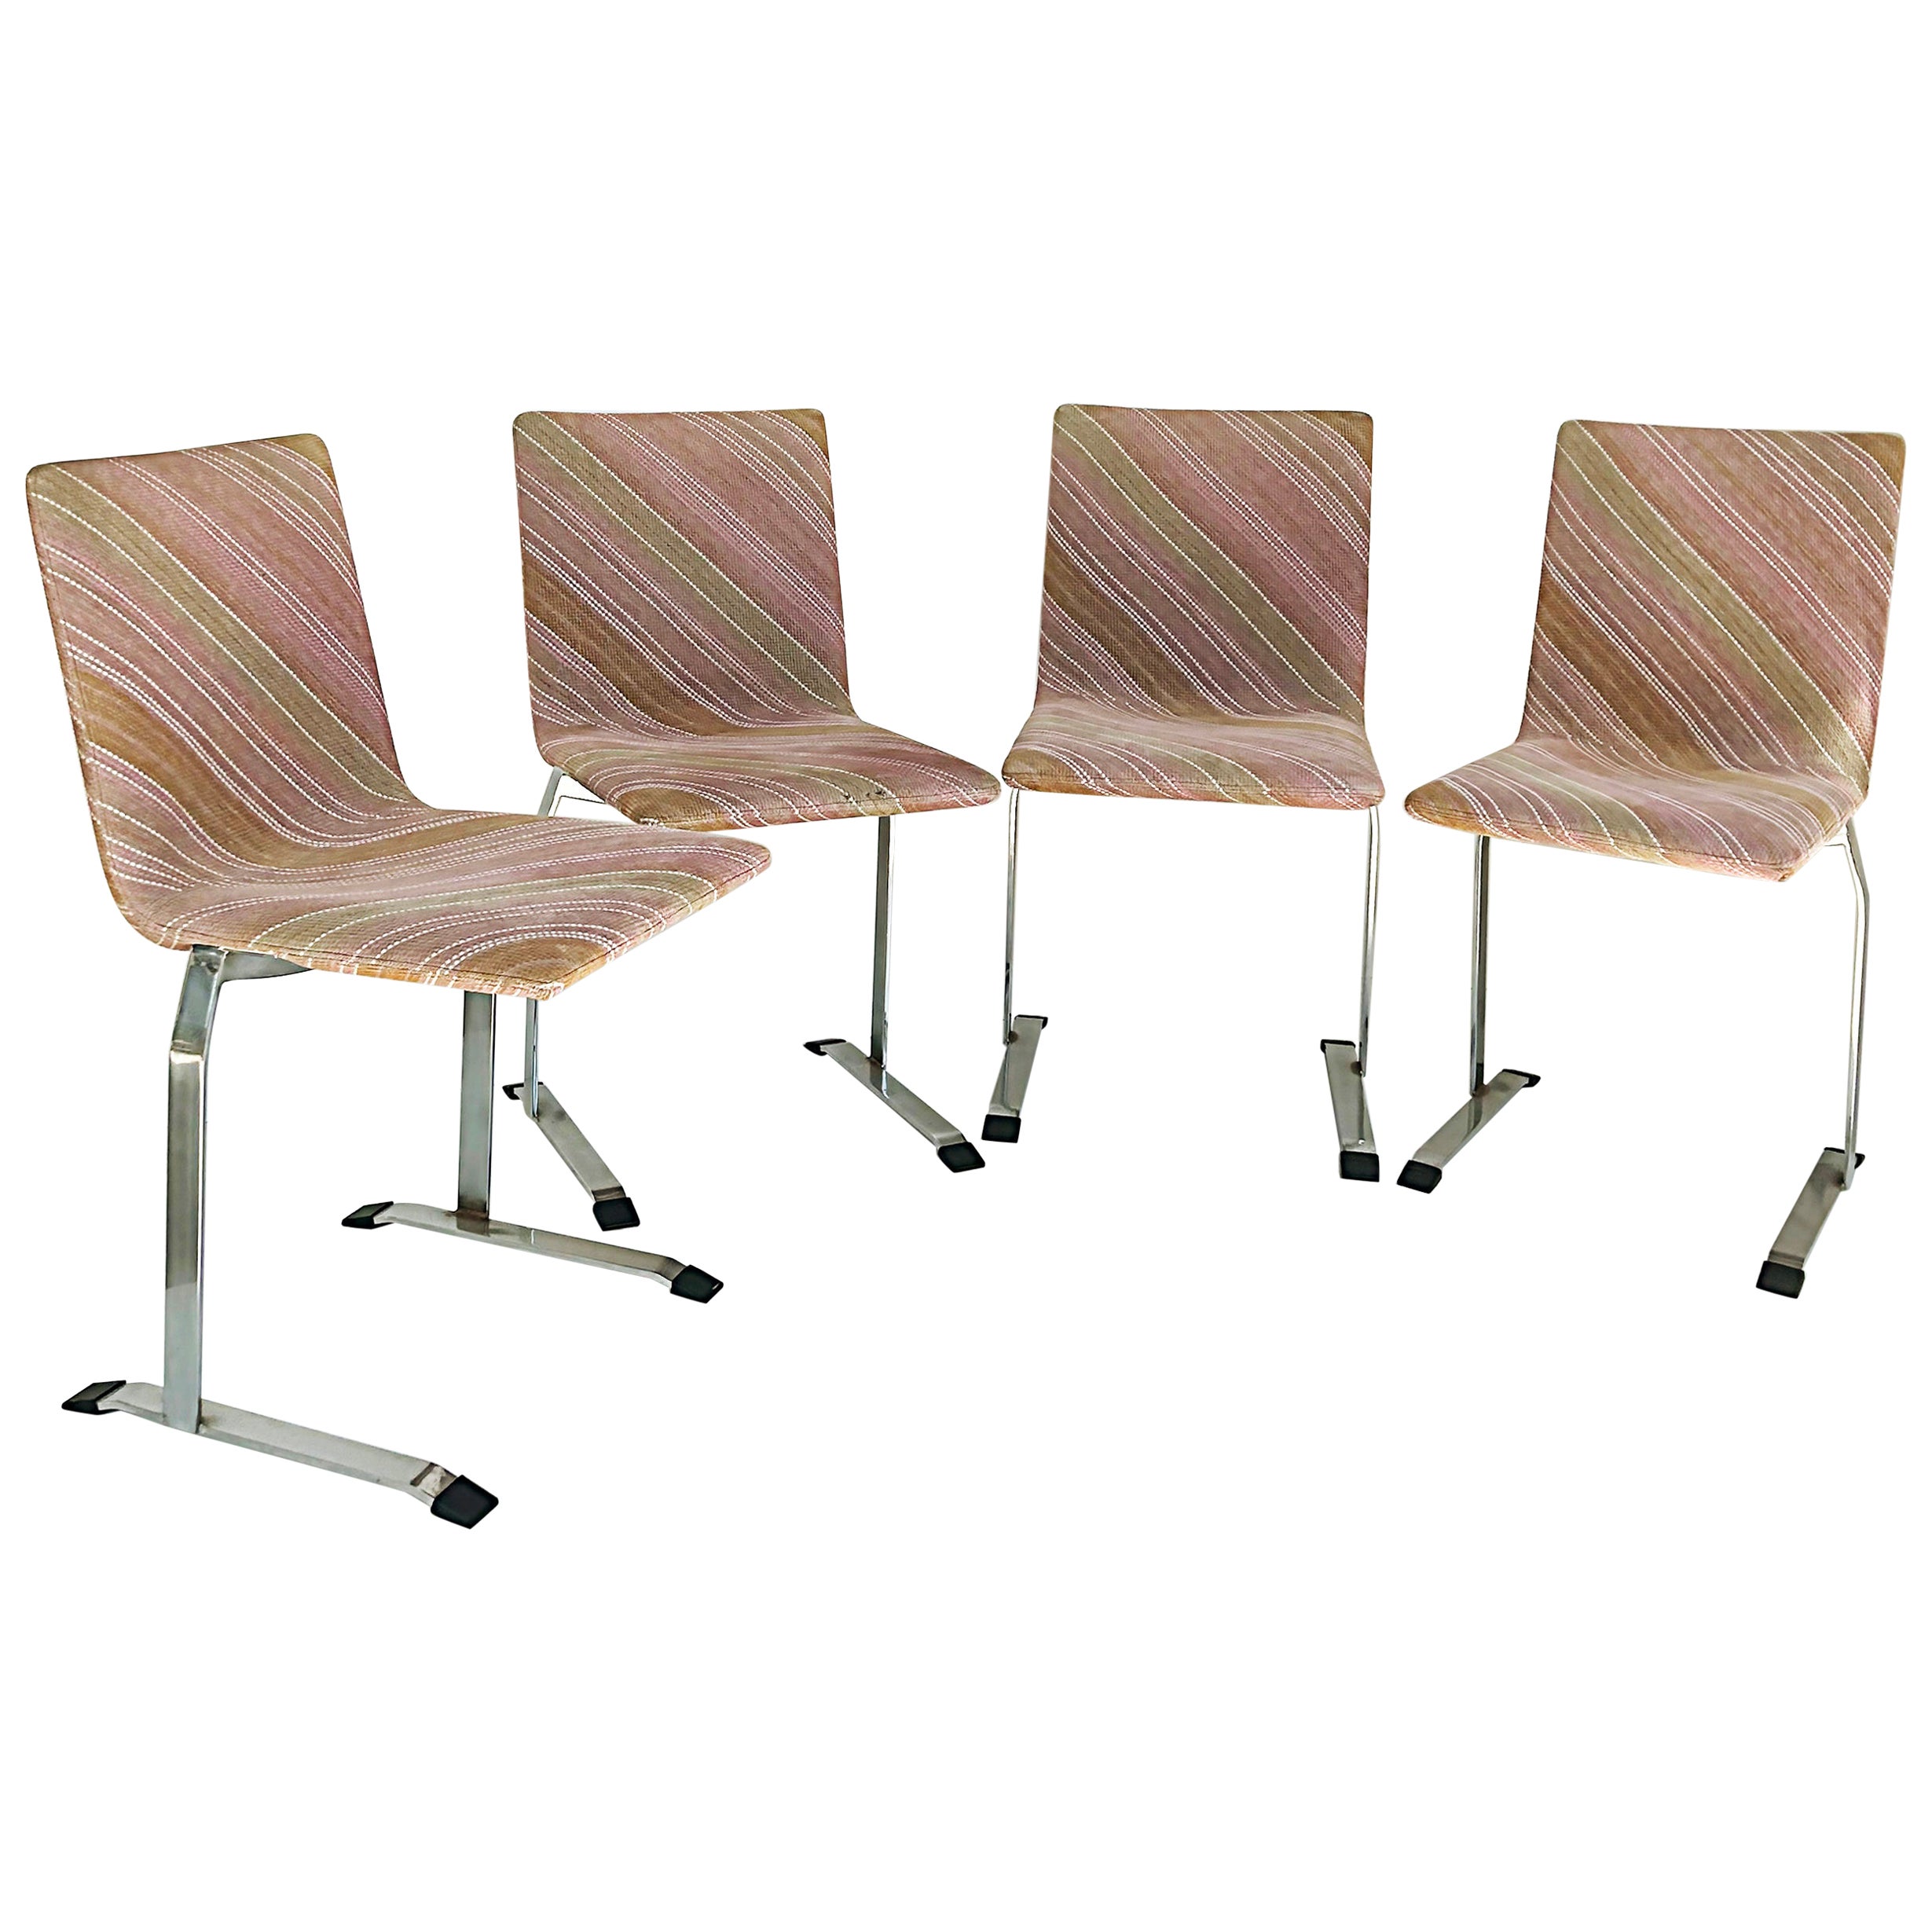 Vintage Saporiti Italia Stainless Steel Dining Chairs, Set of 4, Original Fabric